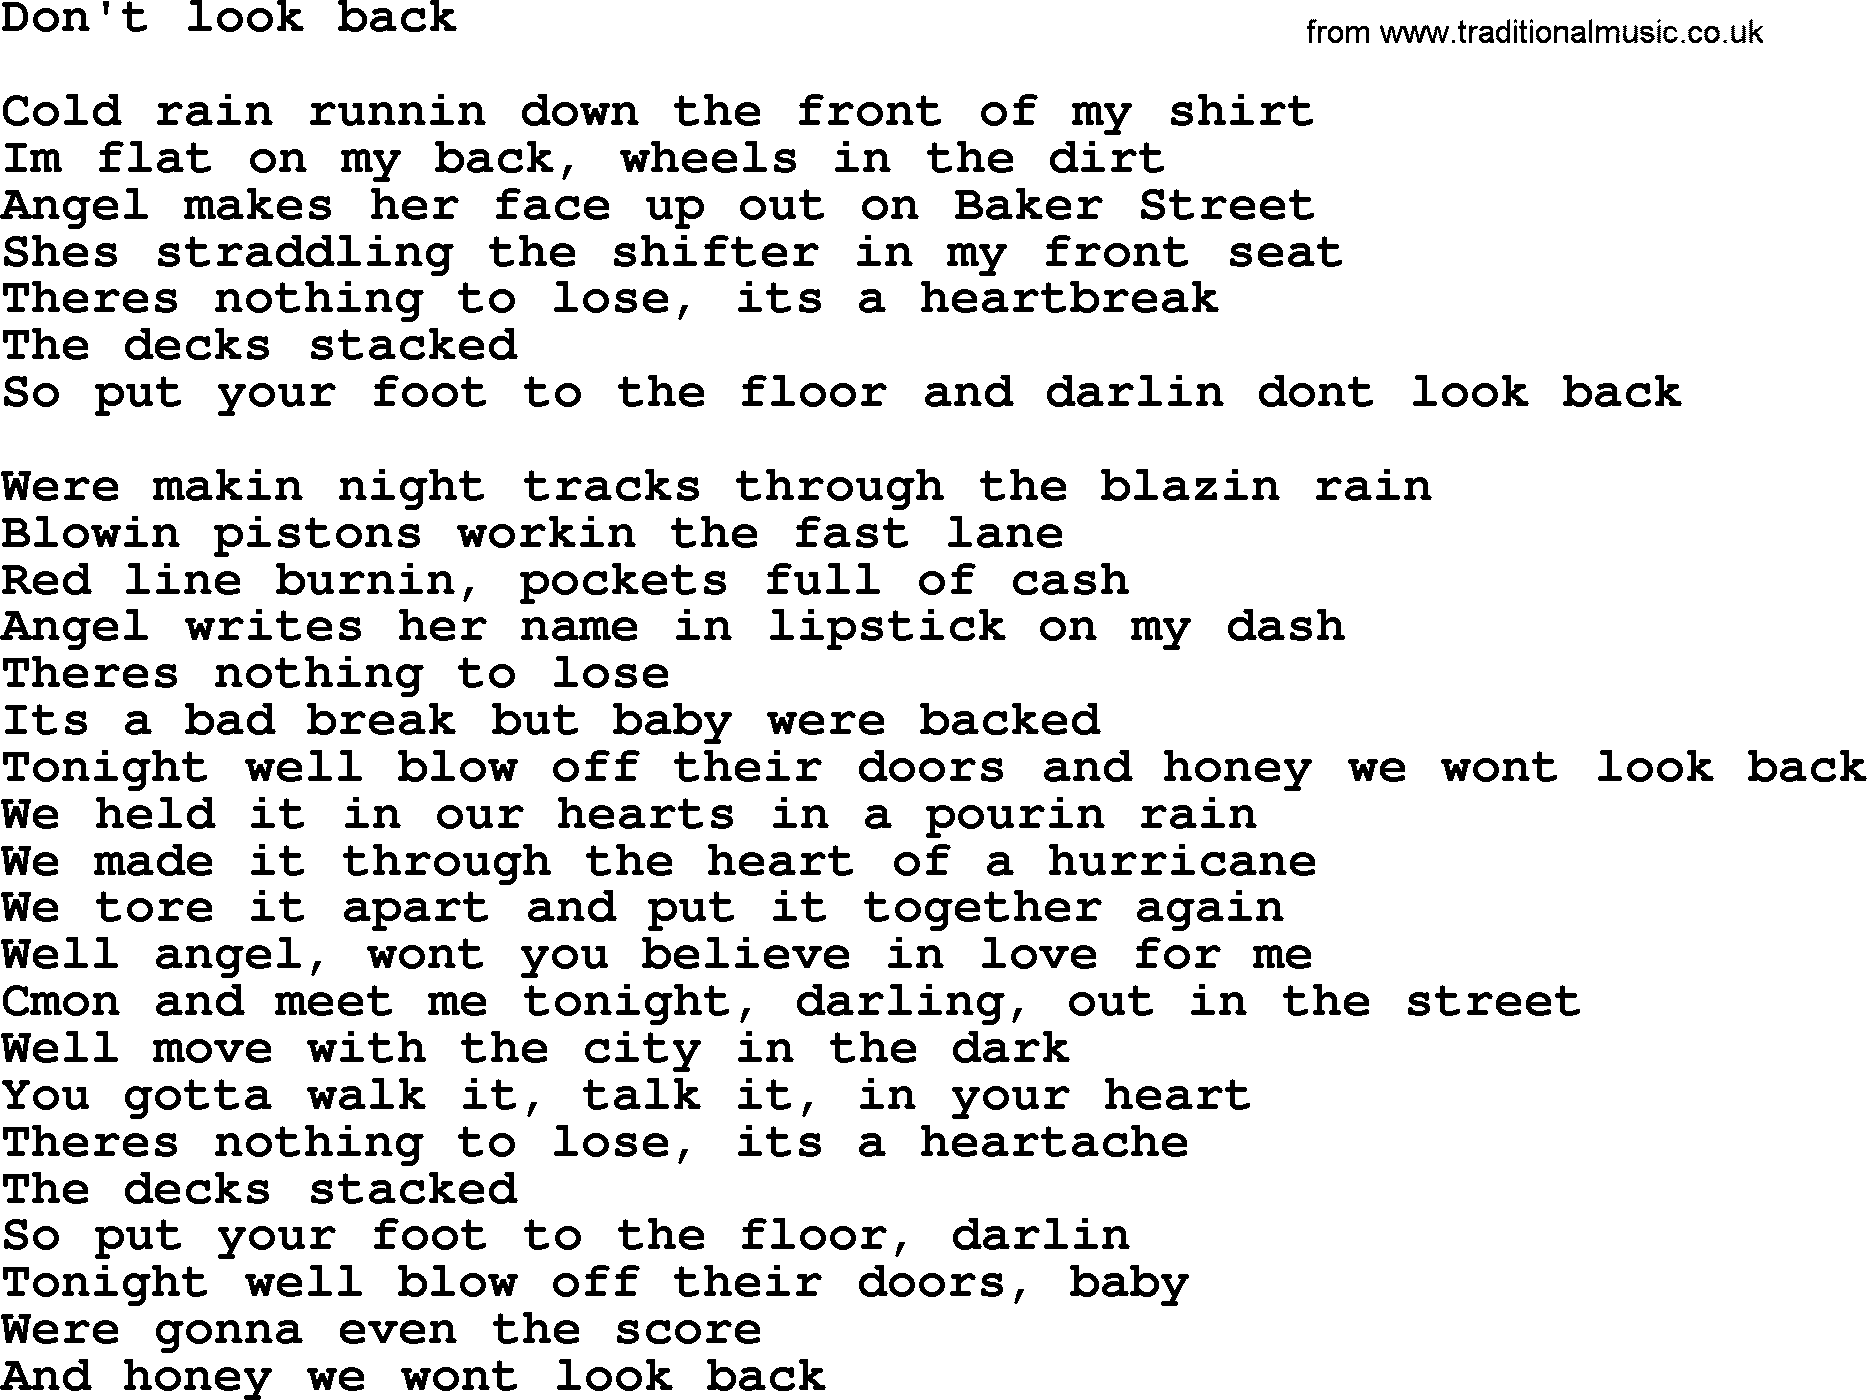 Bruce Springsteen song: Don't Look Back lyrics